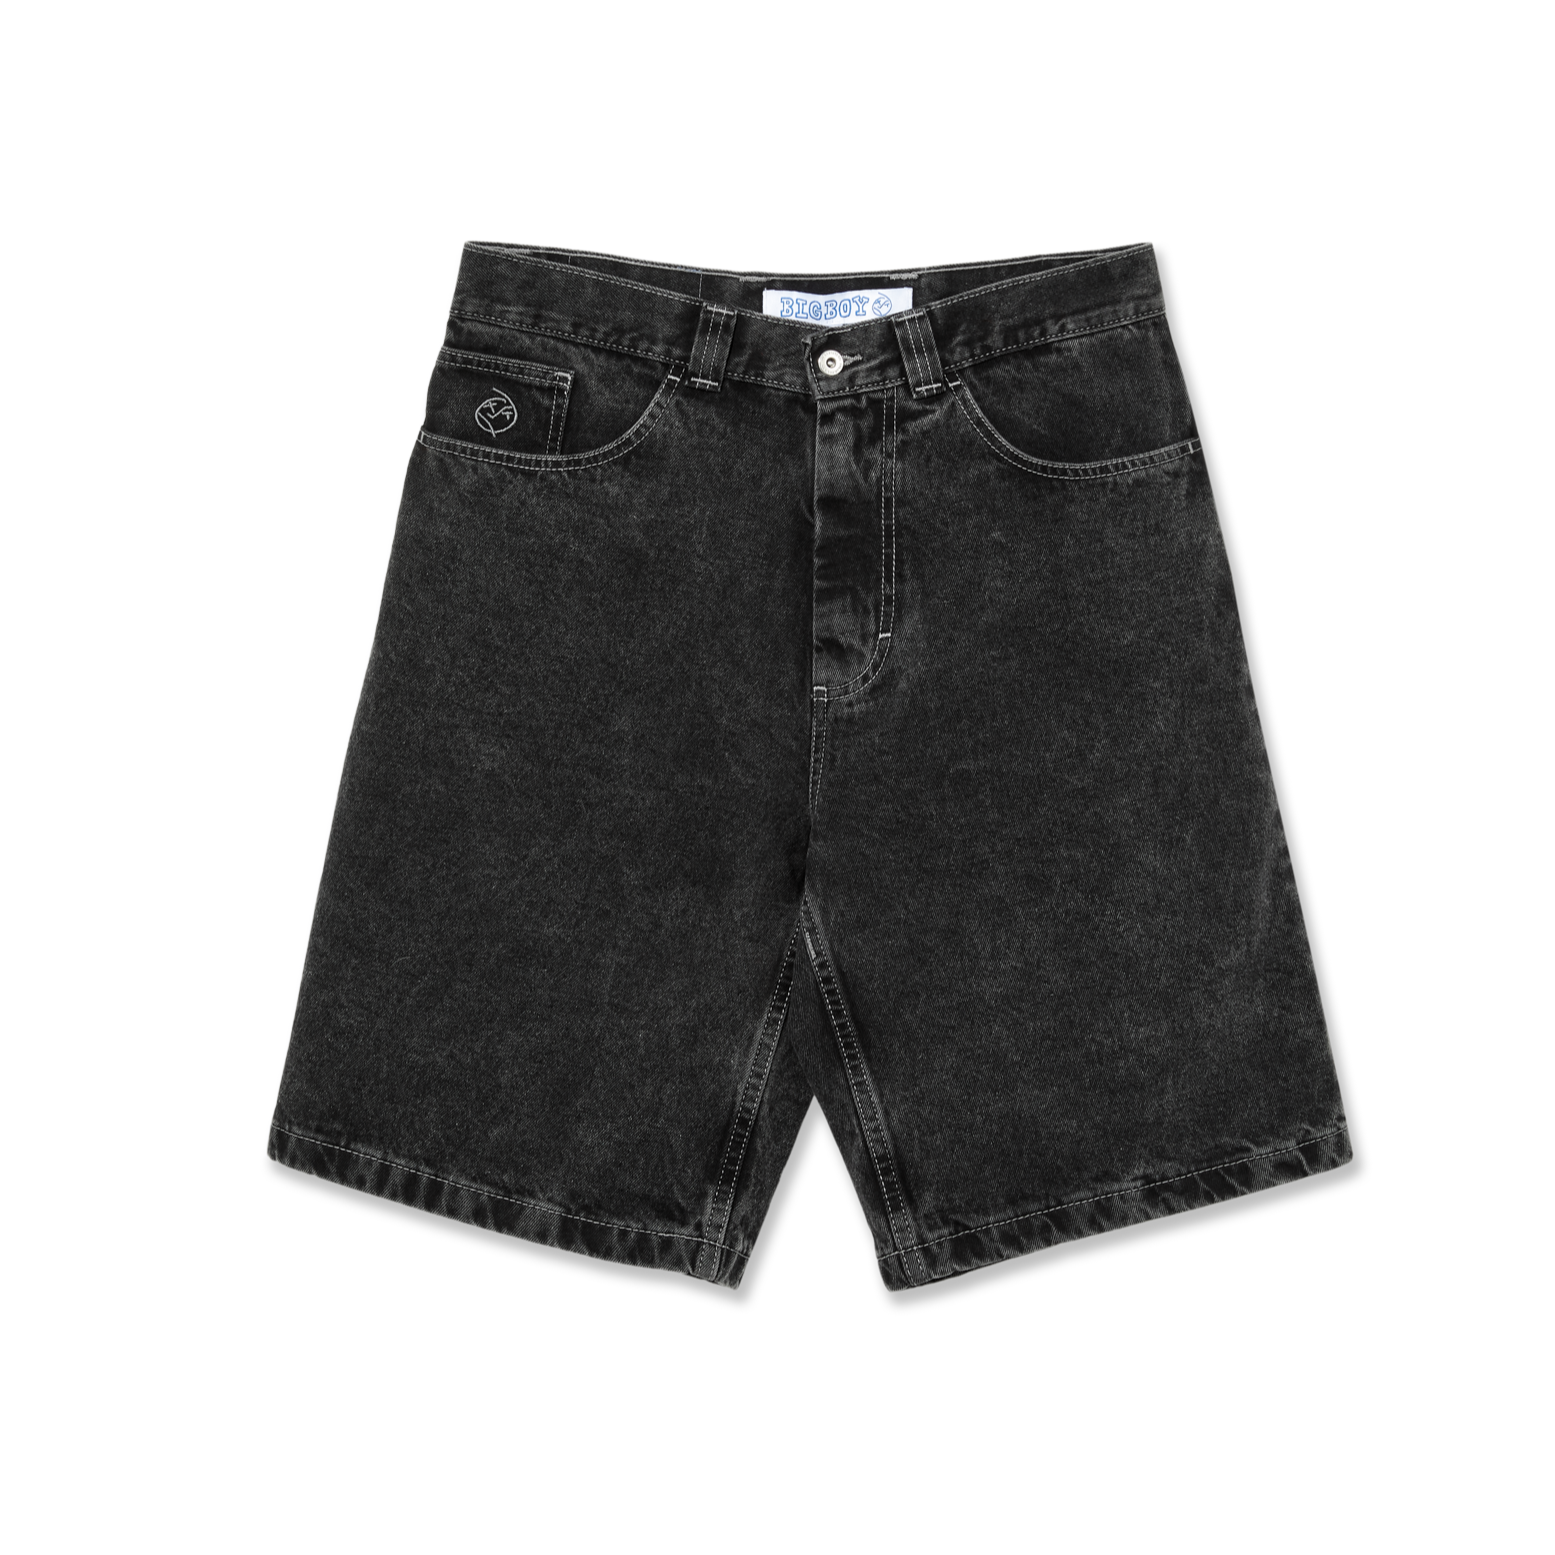 POLAR SKATE CO.] Big Boy Shorts - Silver Black – RIVERBIRCH SKATESHOP